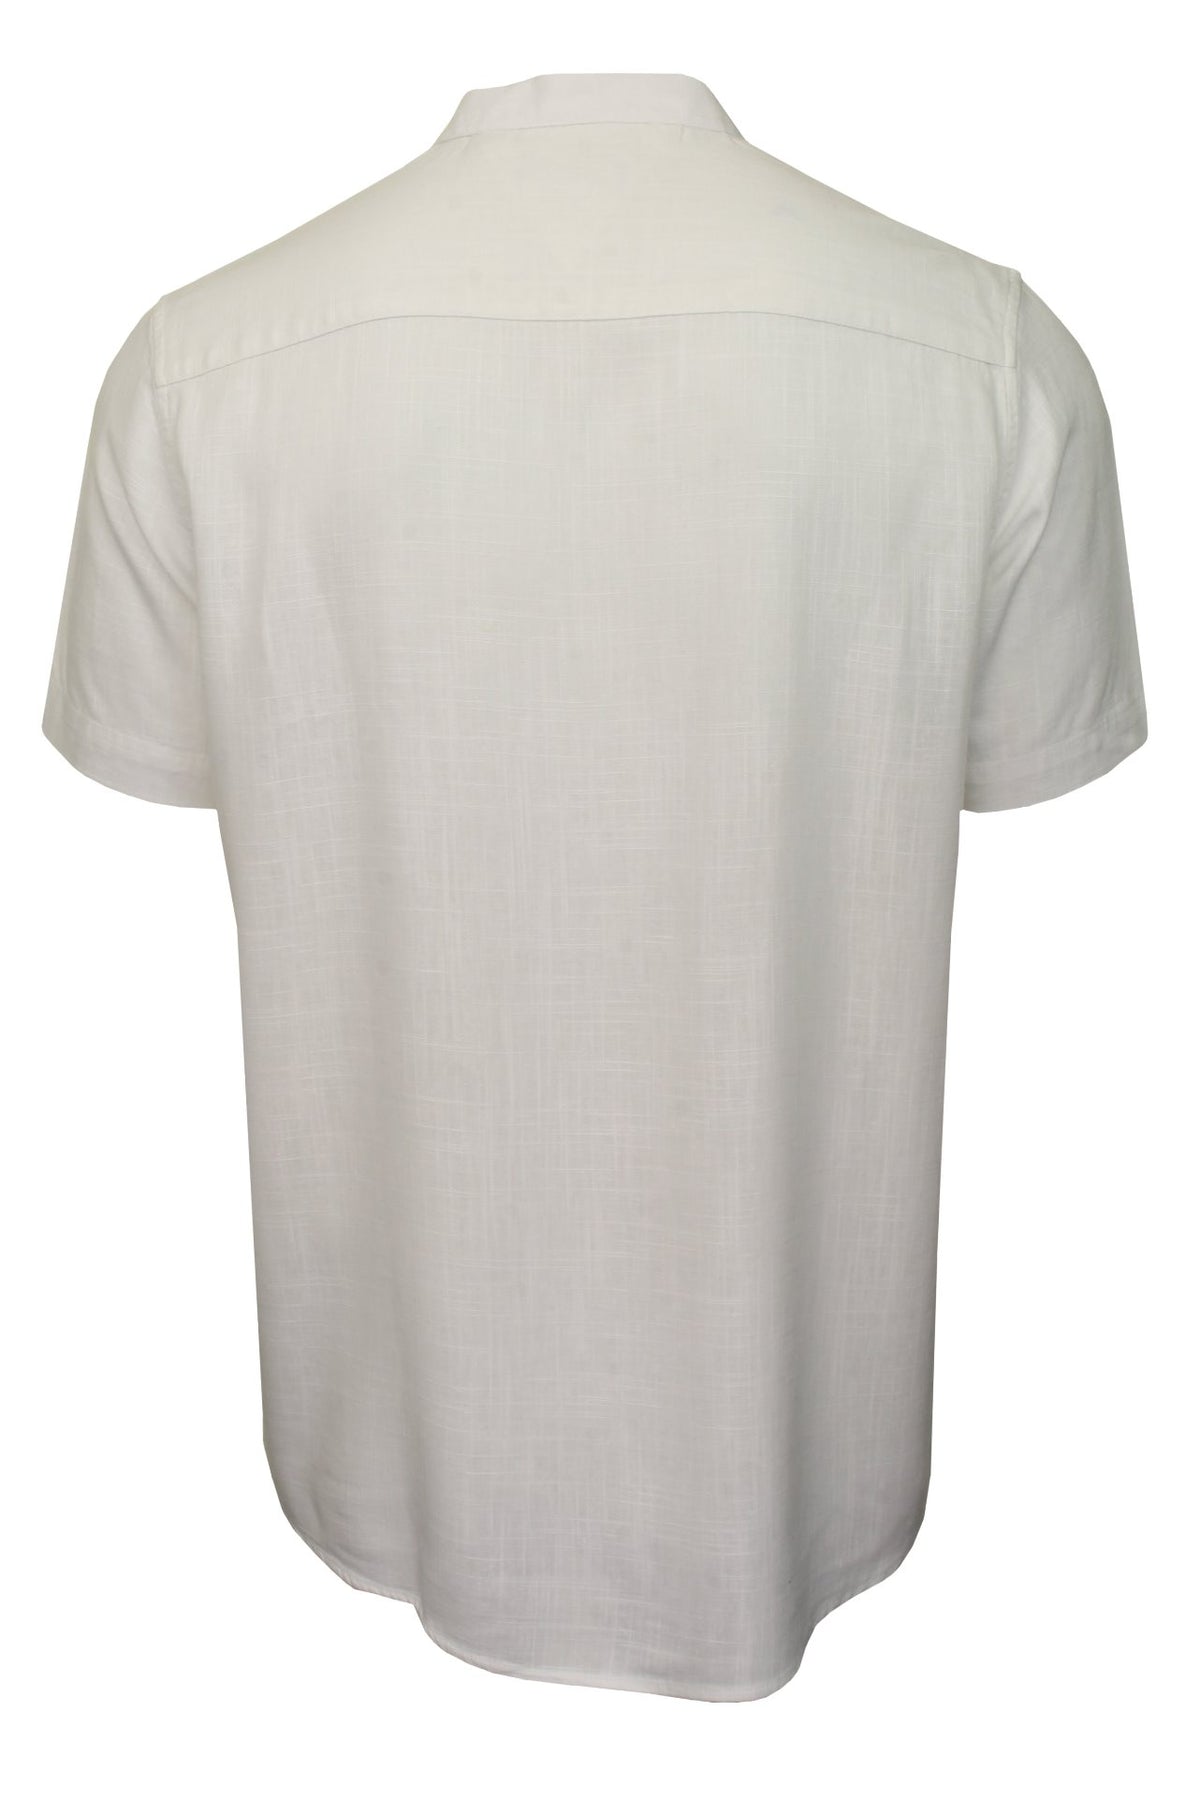 Brave Soul Mens 'Anglo' Linen Mix Grandad Shirt - Short Sleeved, 03, Msh-508Anglo, Optic White